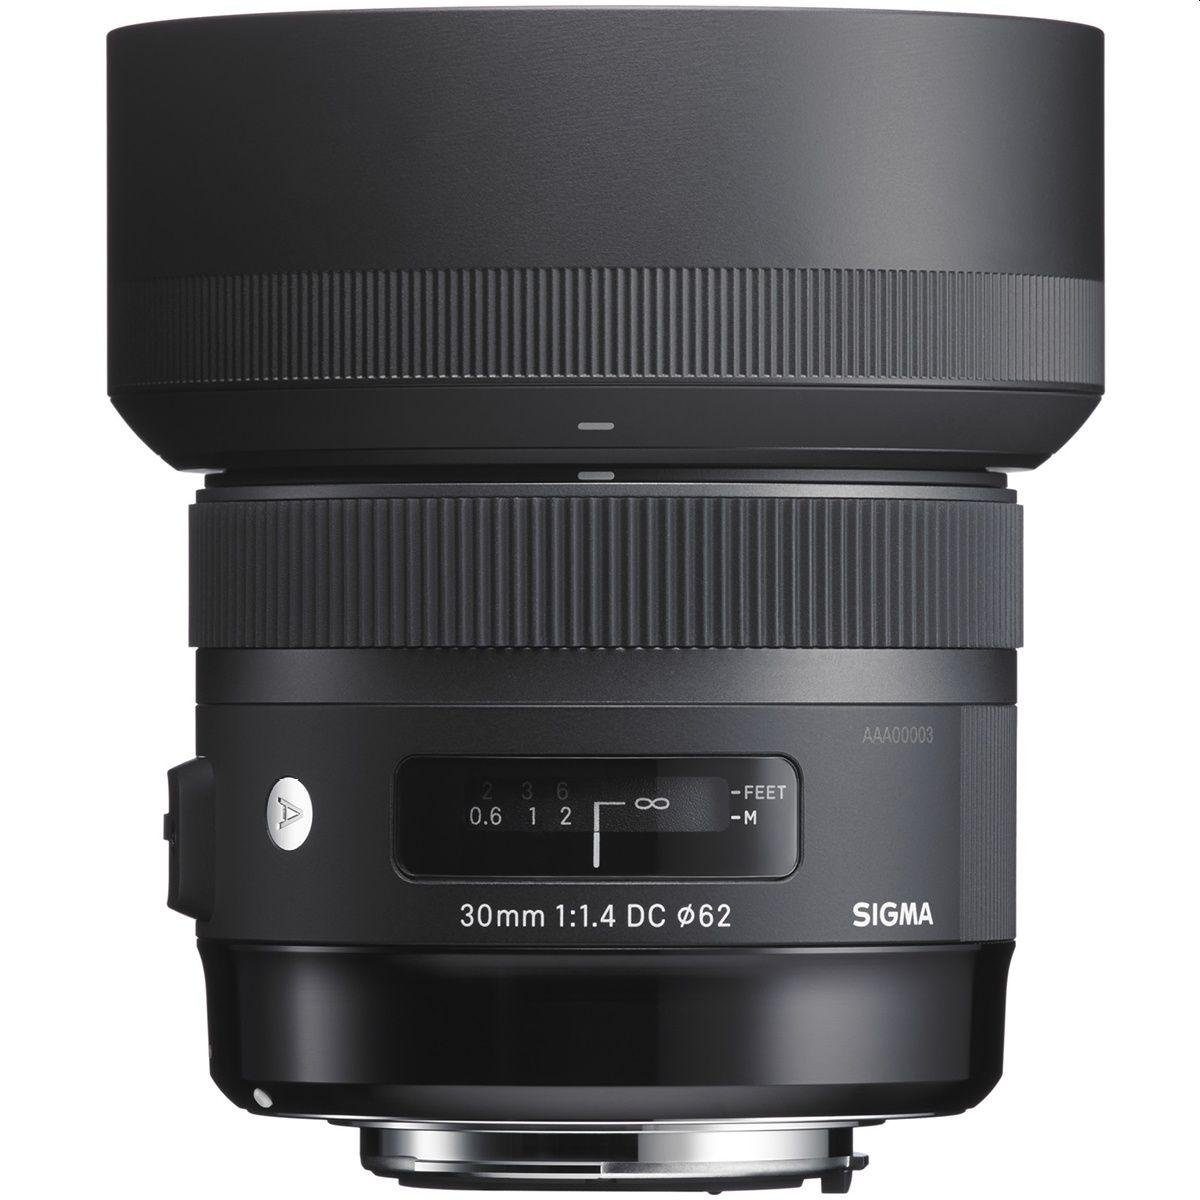 DC SIGMA 1:1,4 Canon HSM AF Art Objektiv für 30mm